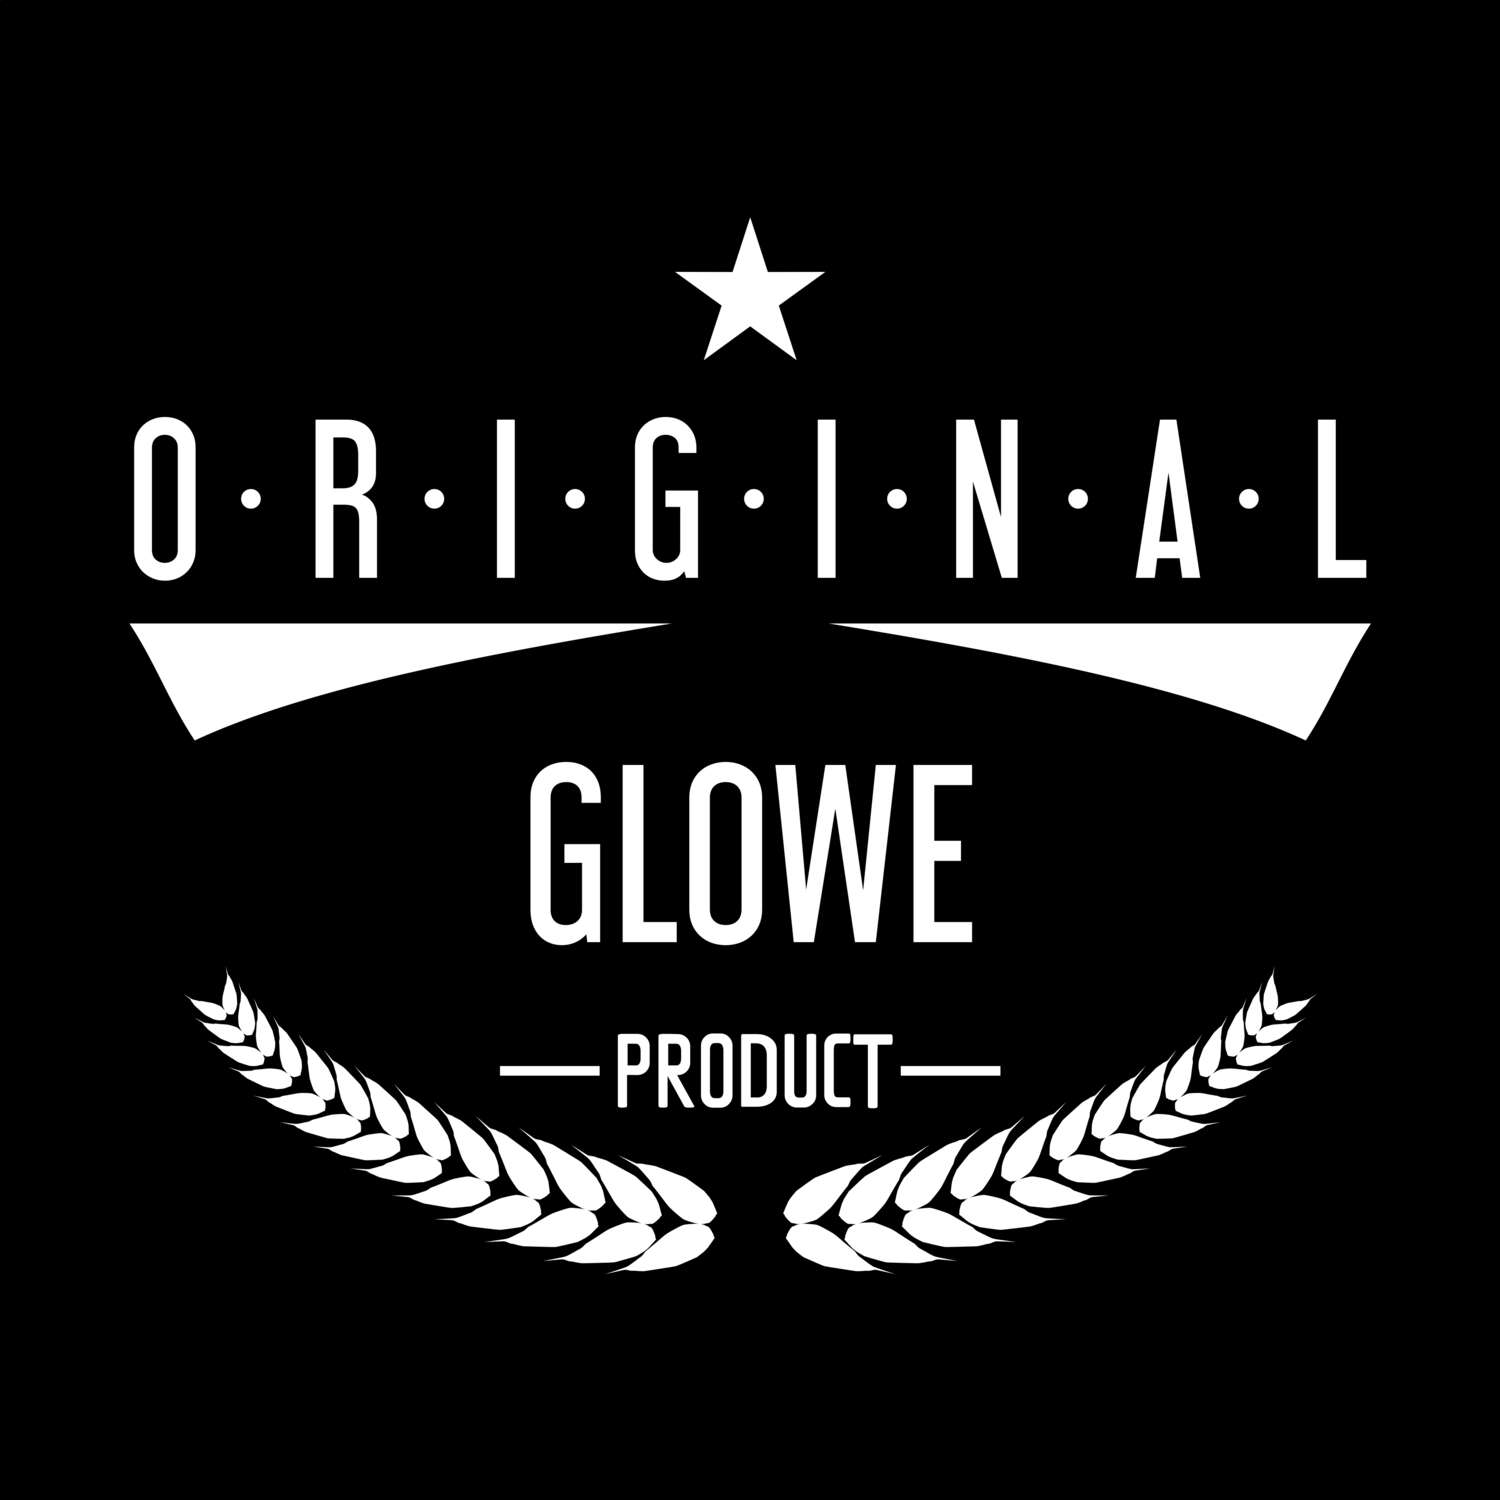 Glowe T-Shirt »Original Product«